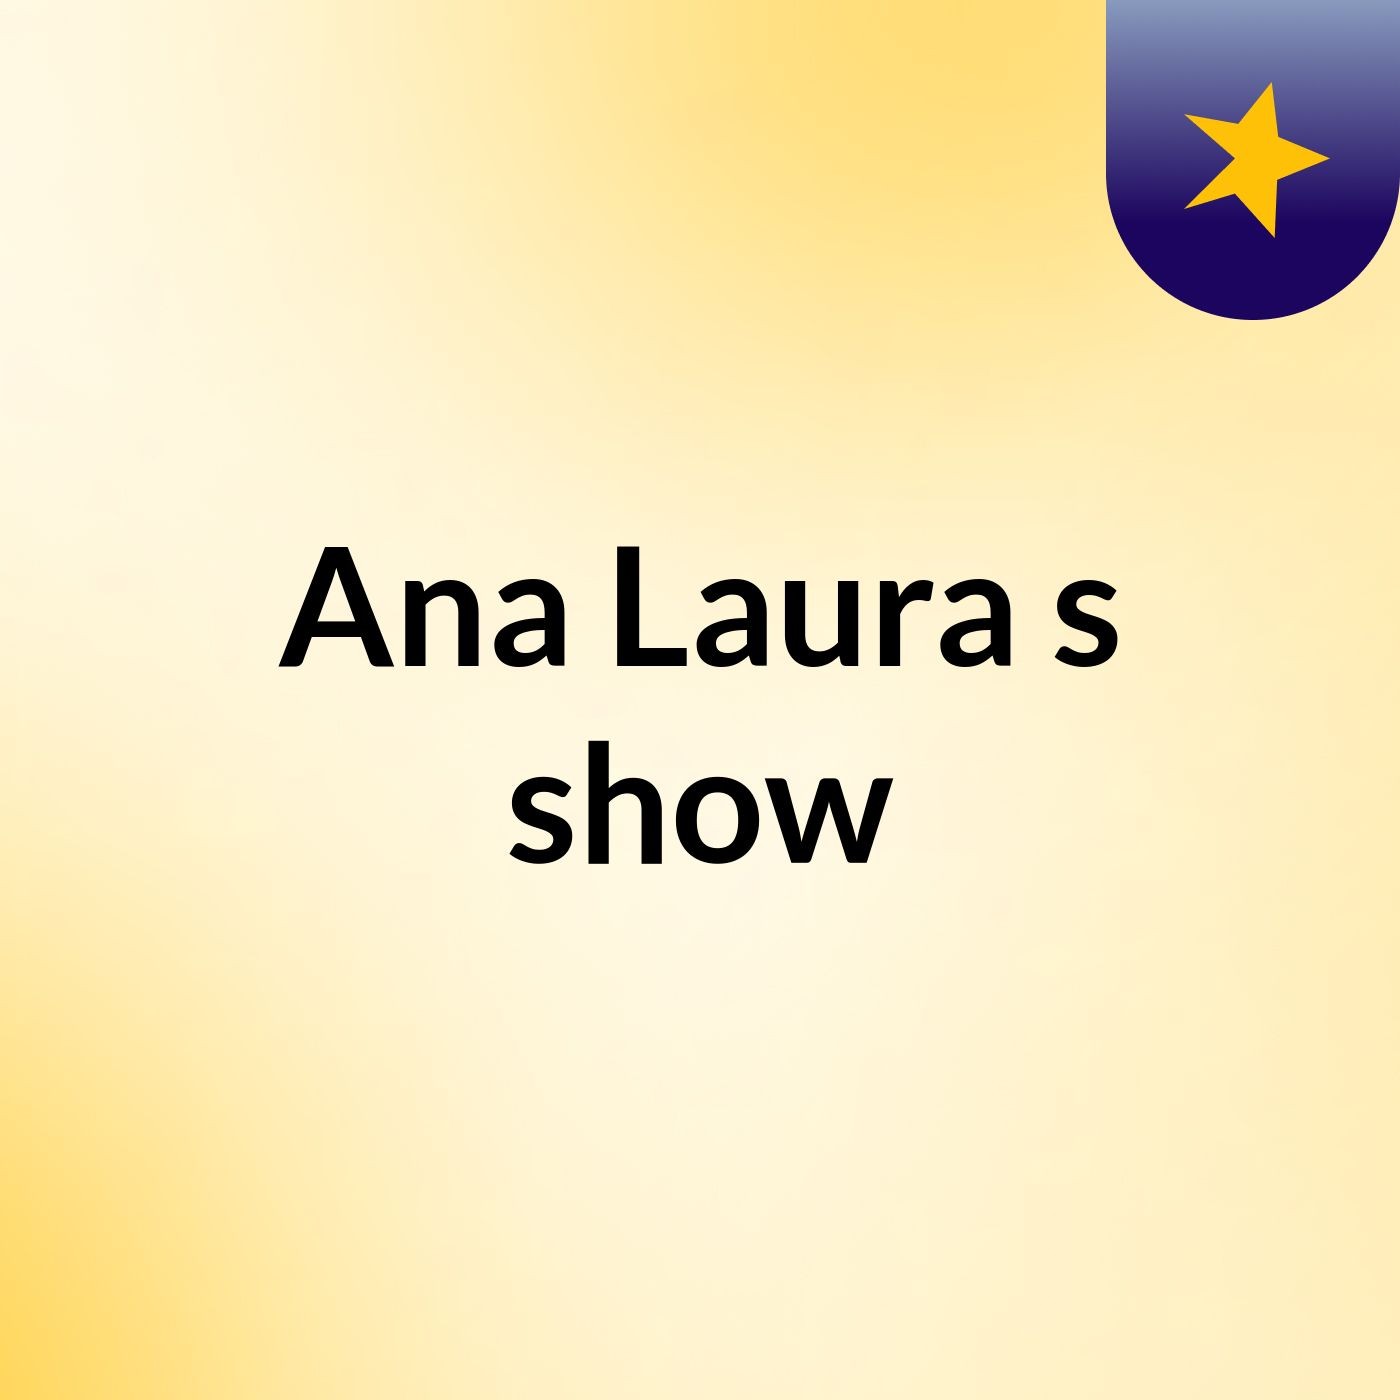 Ana Laura's show